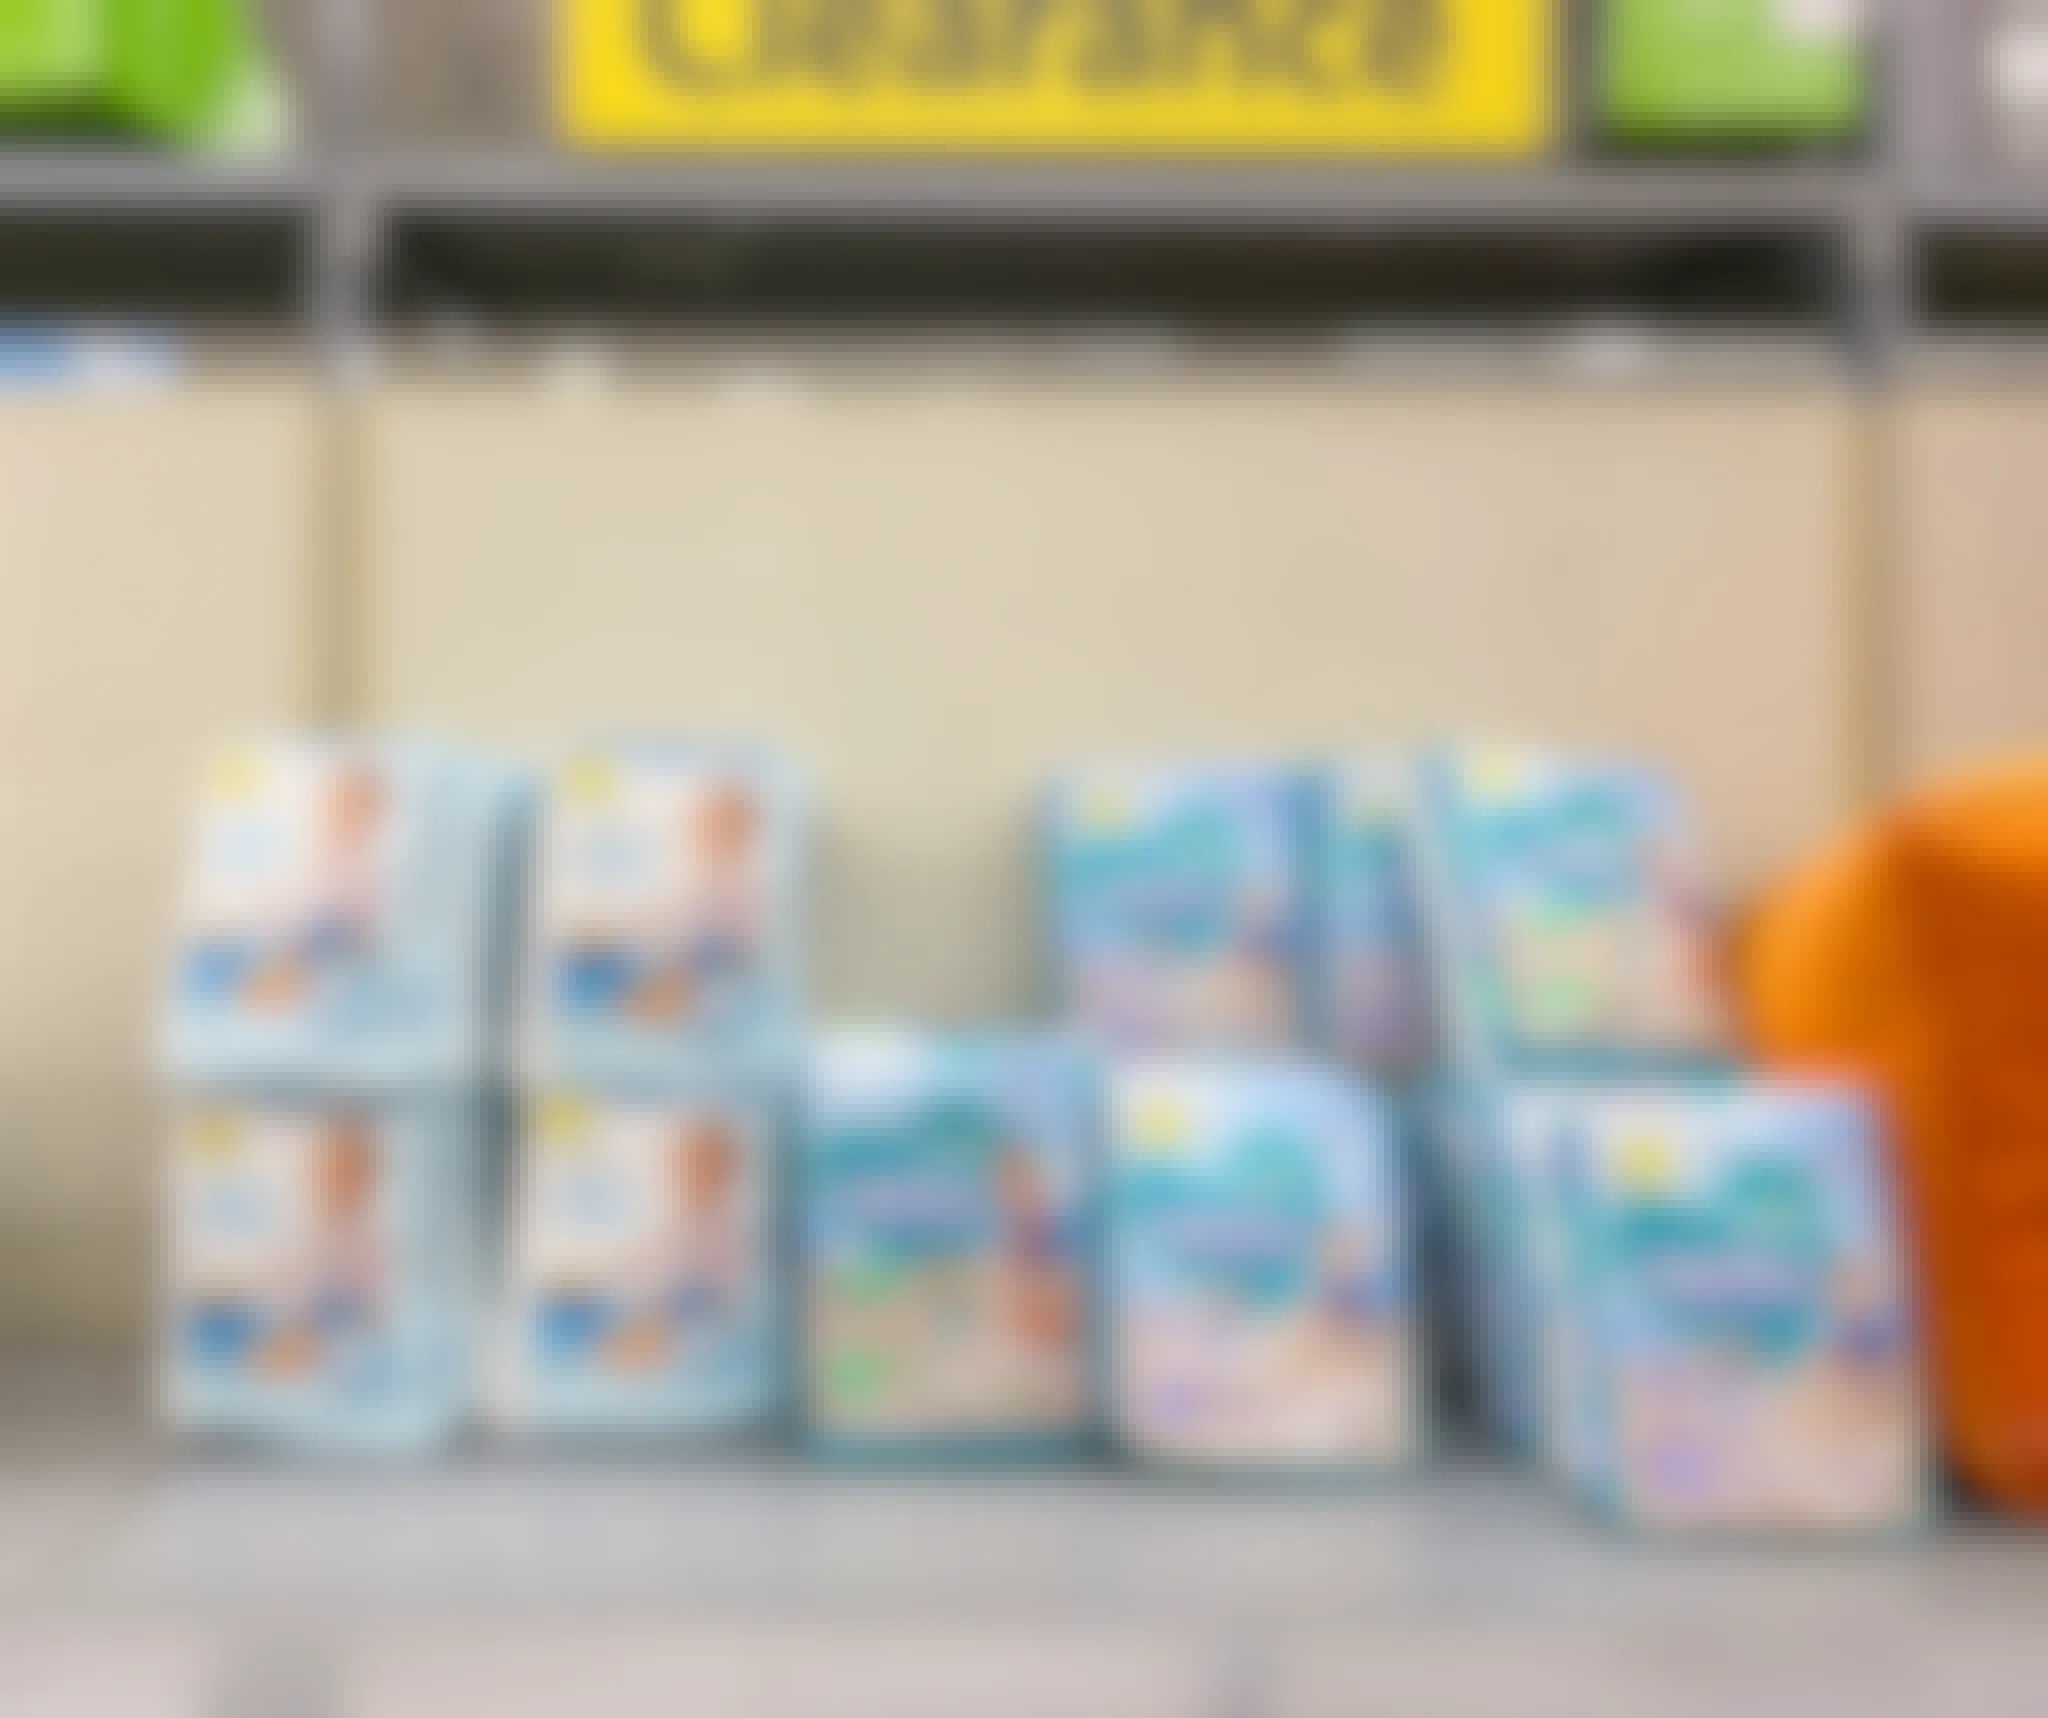 swim diapers on clearance on walmart shelf